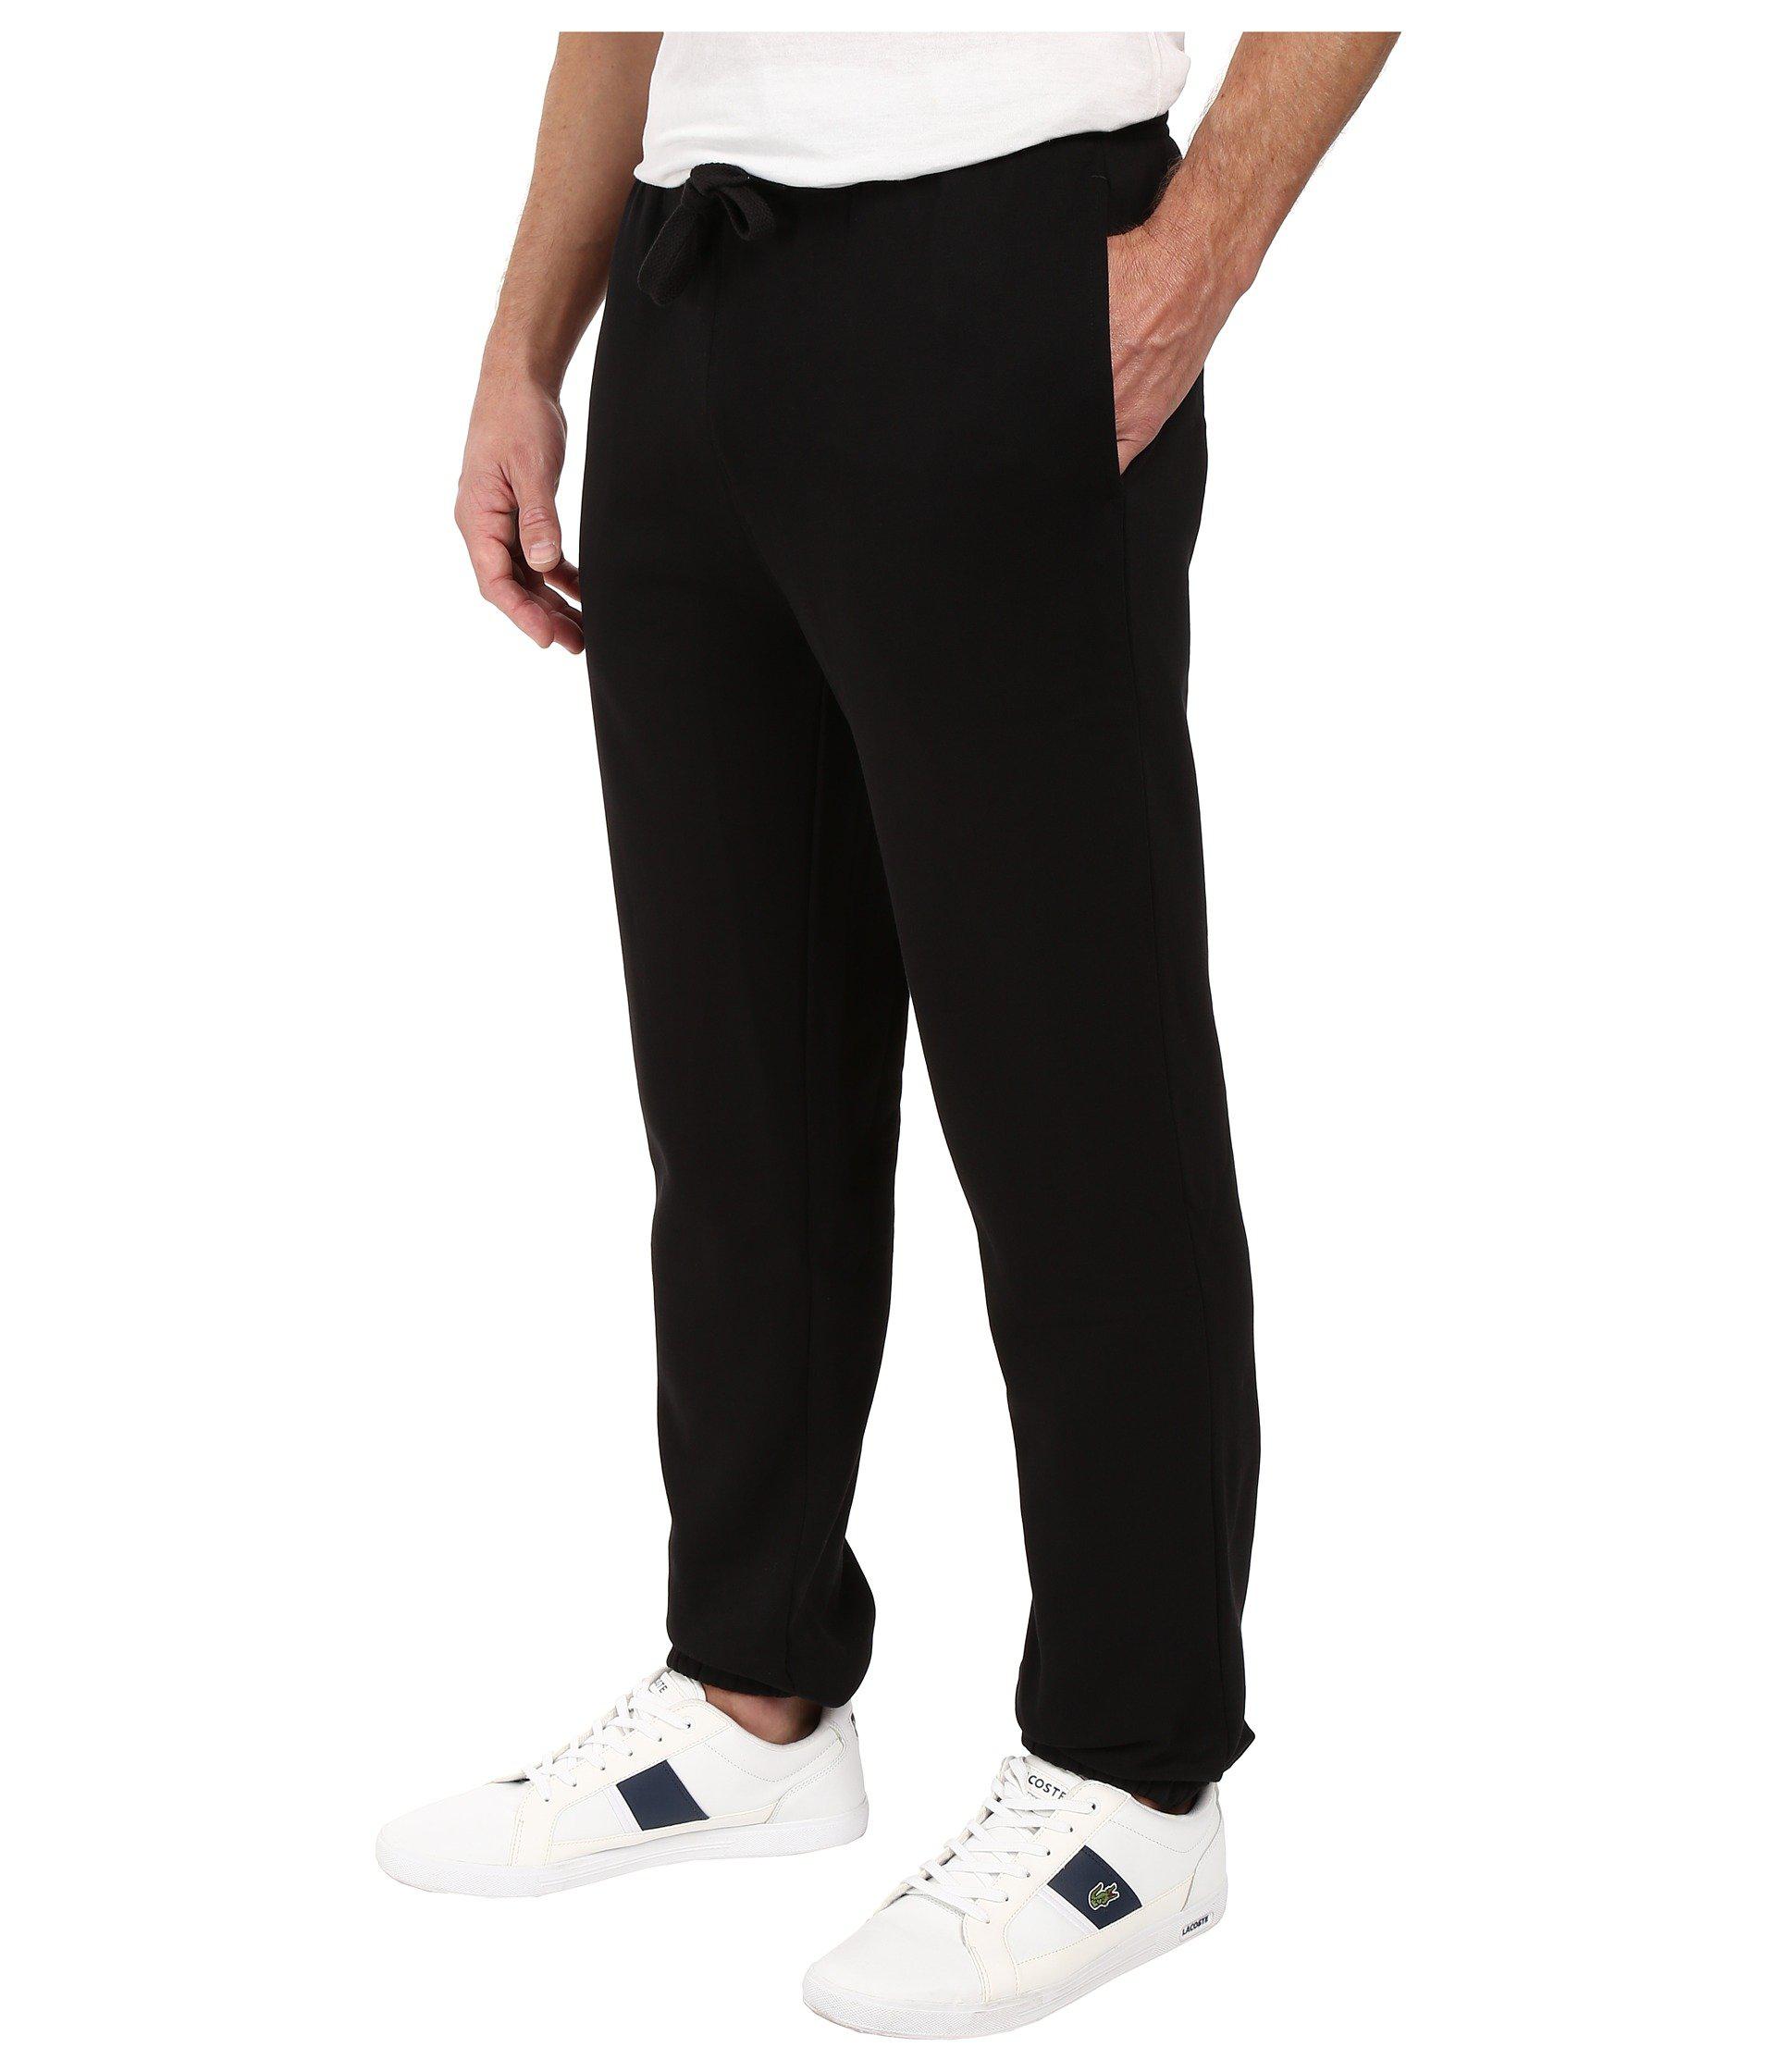 Lacoste Sport Fleece Pants With Elastic Leg Opening in Black for Men - Lyst